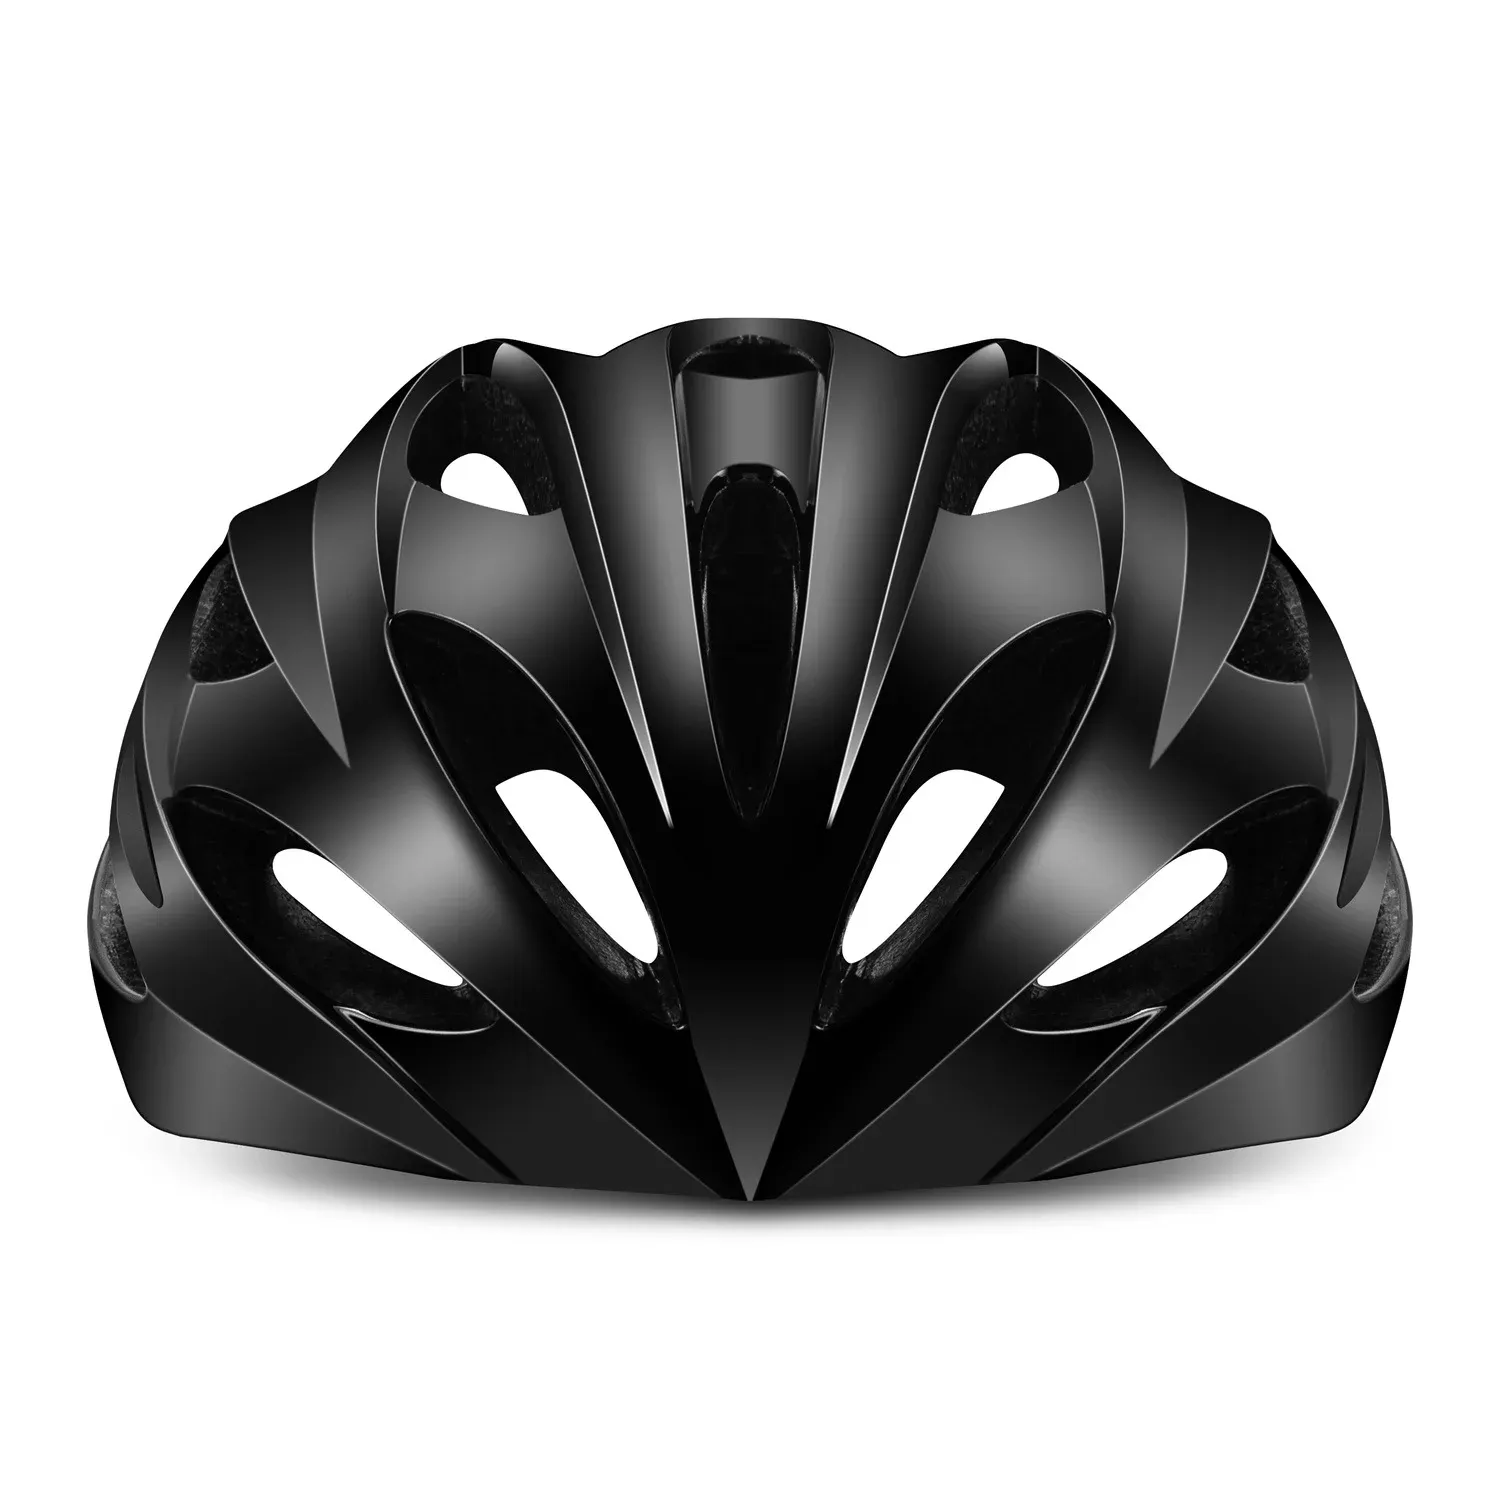 CAIRBULL Ultralight Road Mountain MTB Bike Helmet Casco De Ciclismo Bicicleta Outdoor Breathable Comfort Riding Safety Helmets